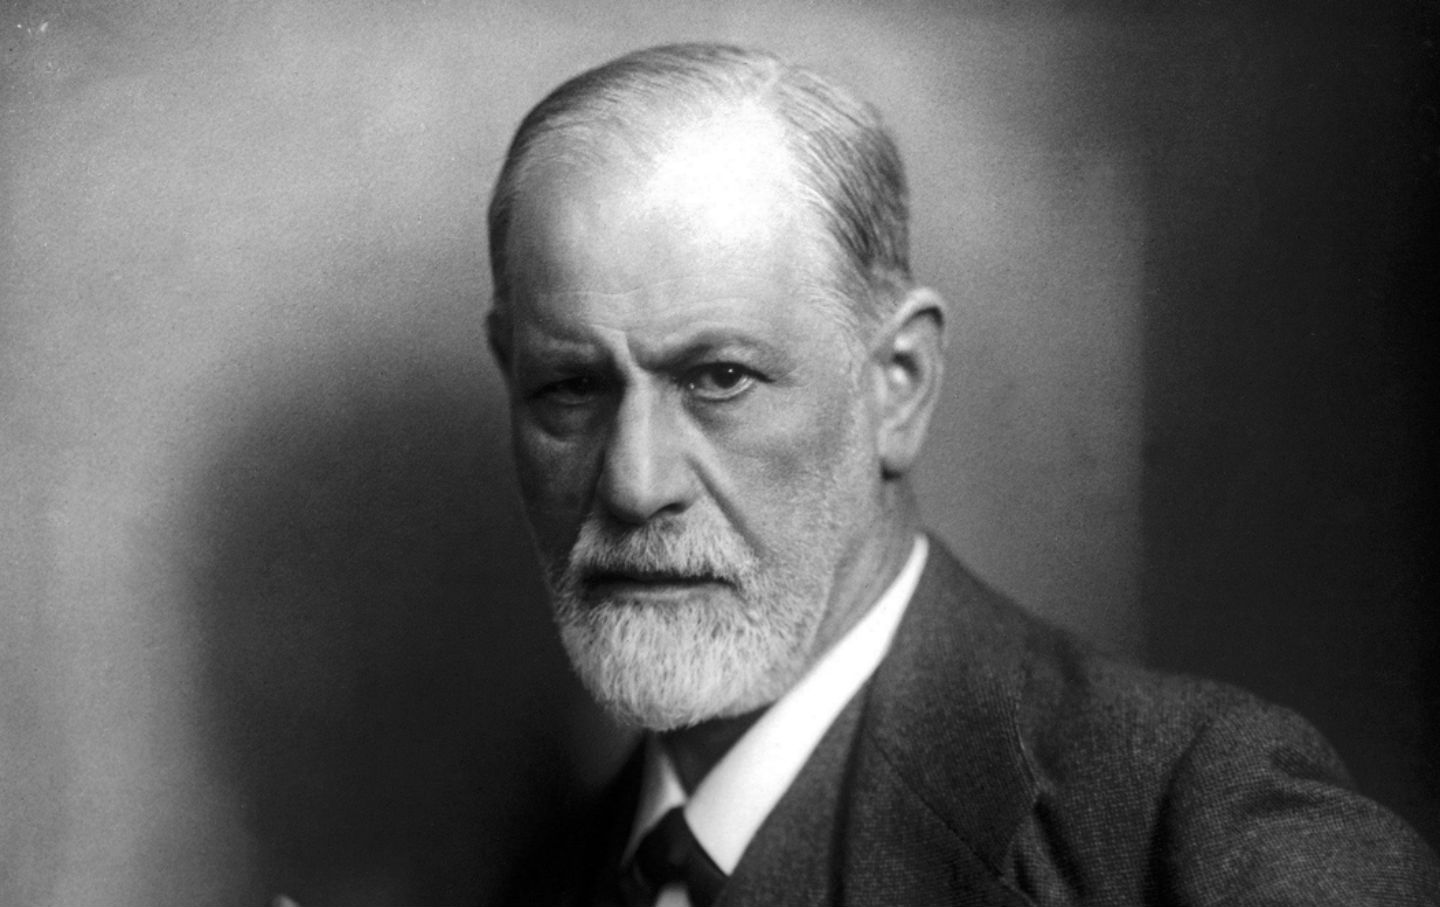 Freud’s Psychoanalysis of the Film “Psycho”